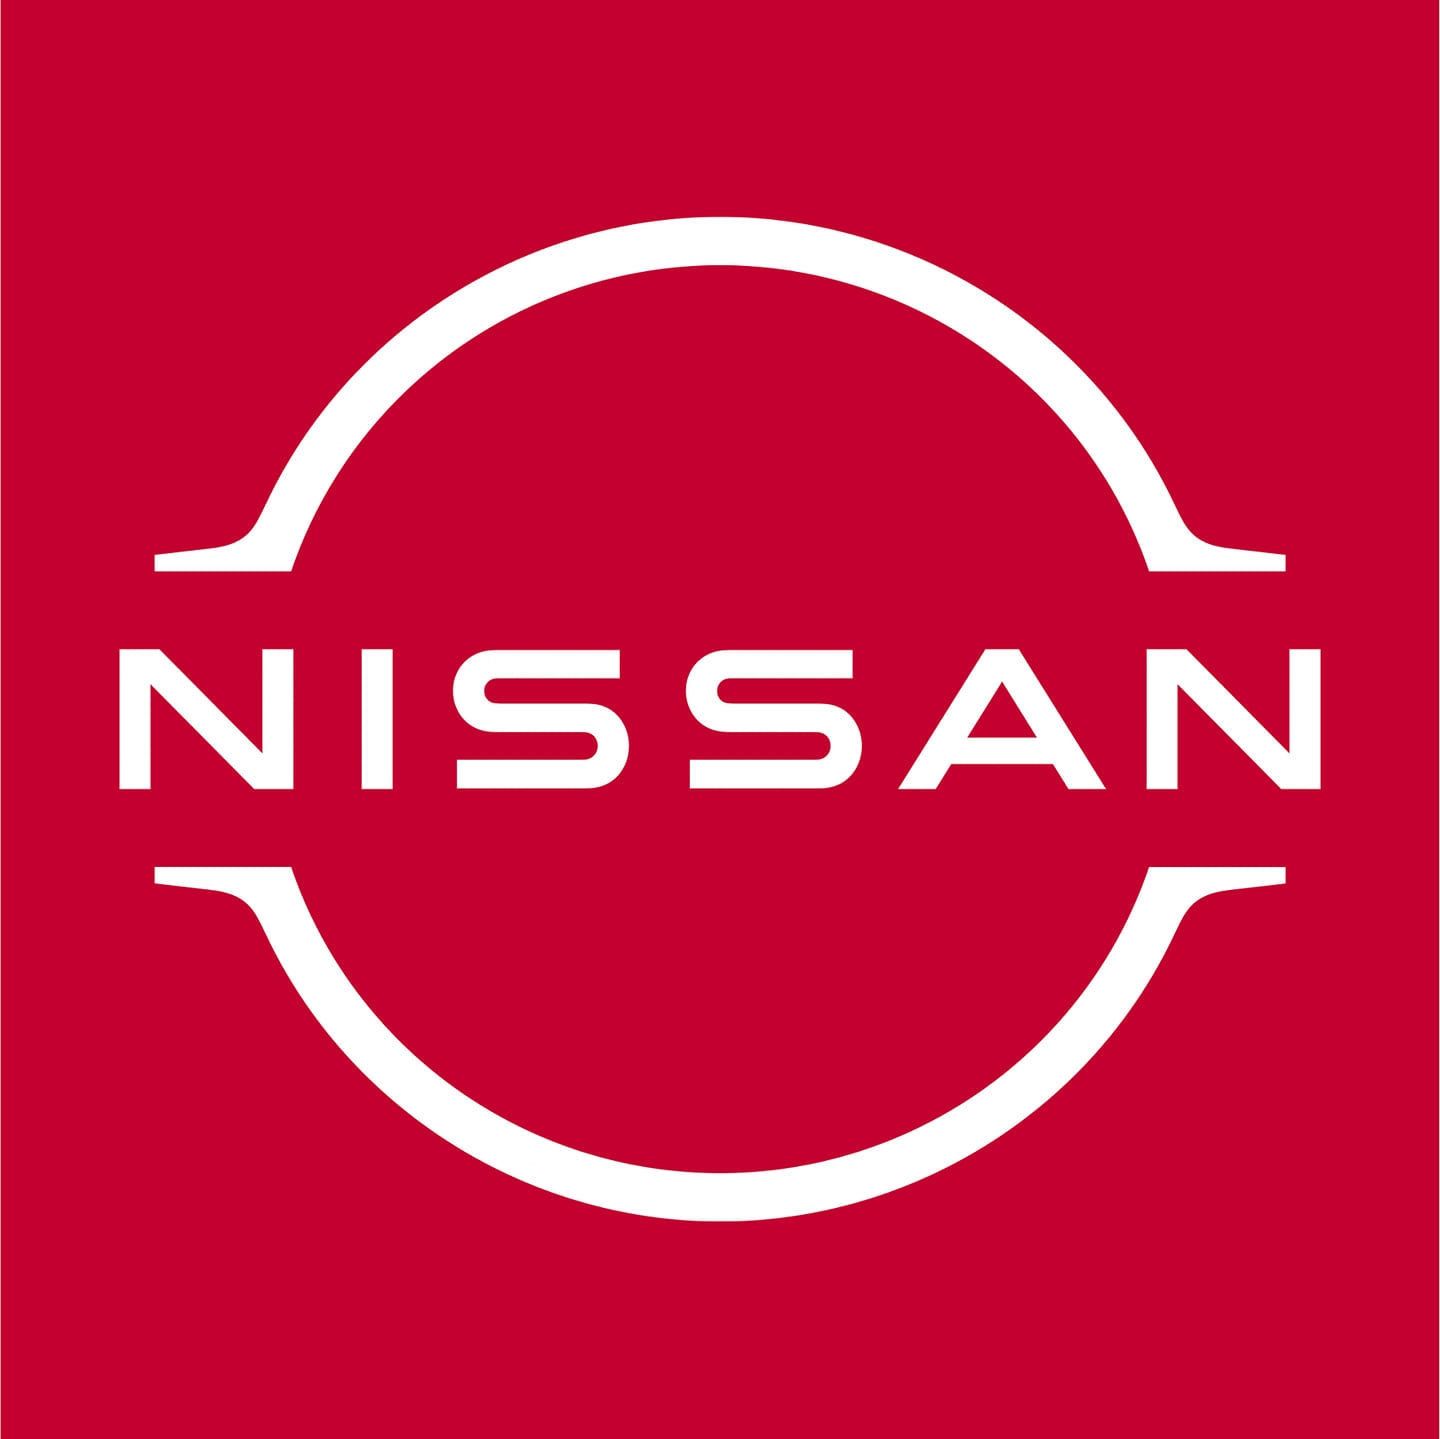 NIGLA NISSAN ITANAGAR - Logo